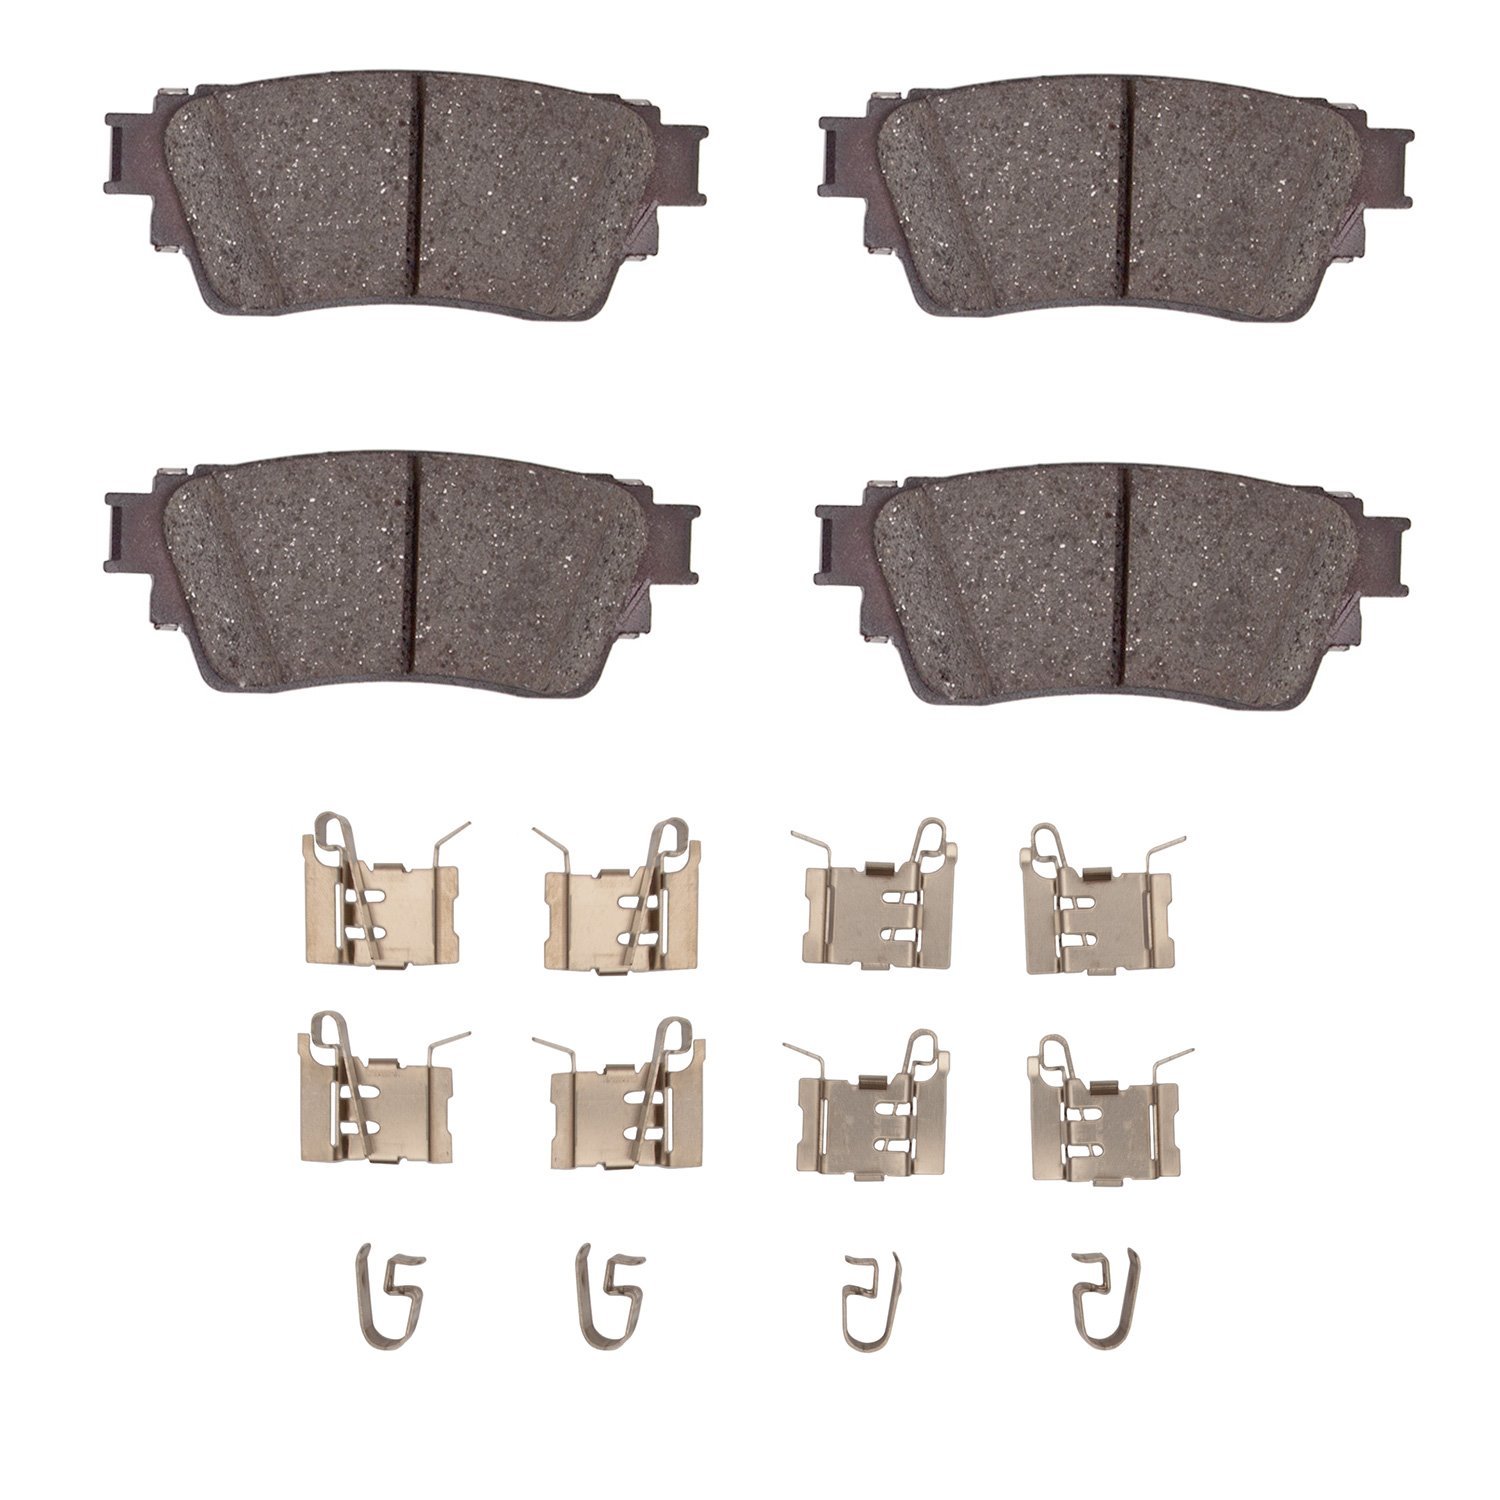 1551-2200-02 5000 Advanced Ceramic Brake Pads & Hardware Kit, Fits Select Multiple Makes/Models, Position: Rear